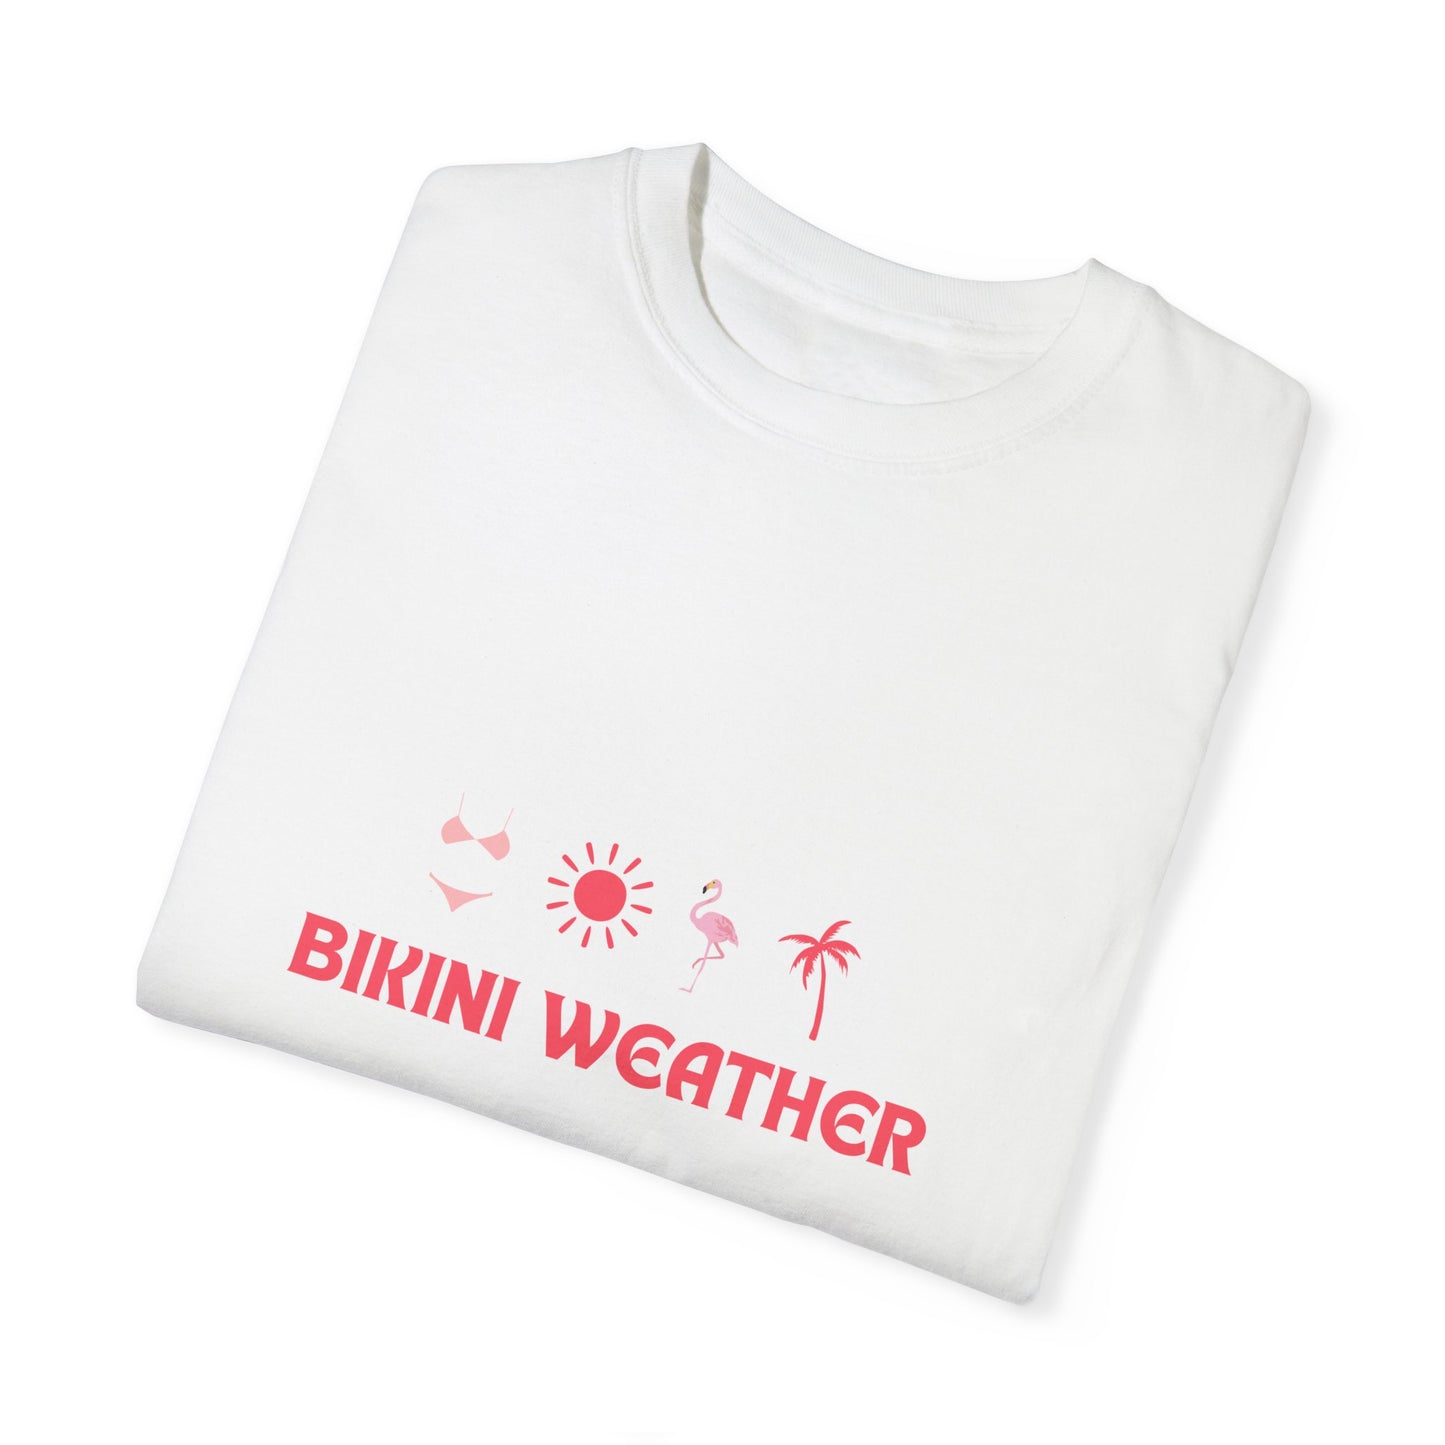 Bikini Weather Crewneck T-shirt